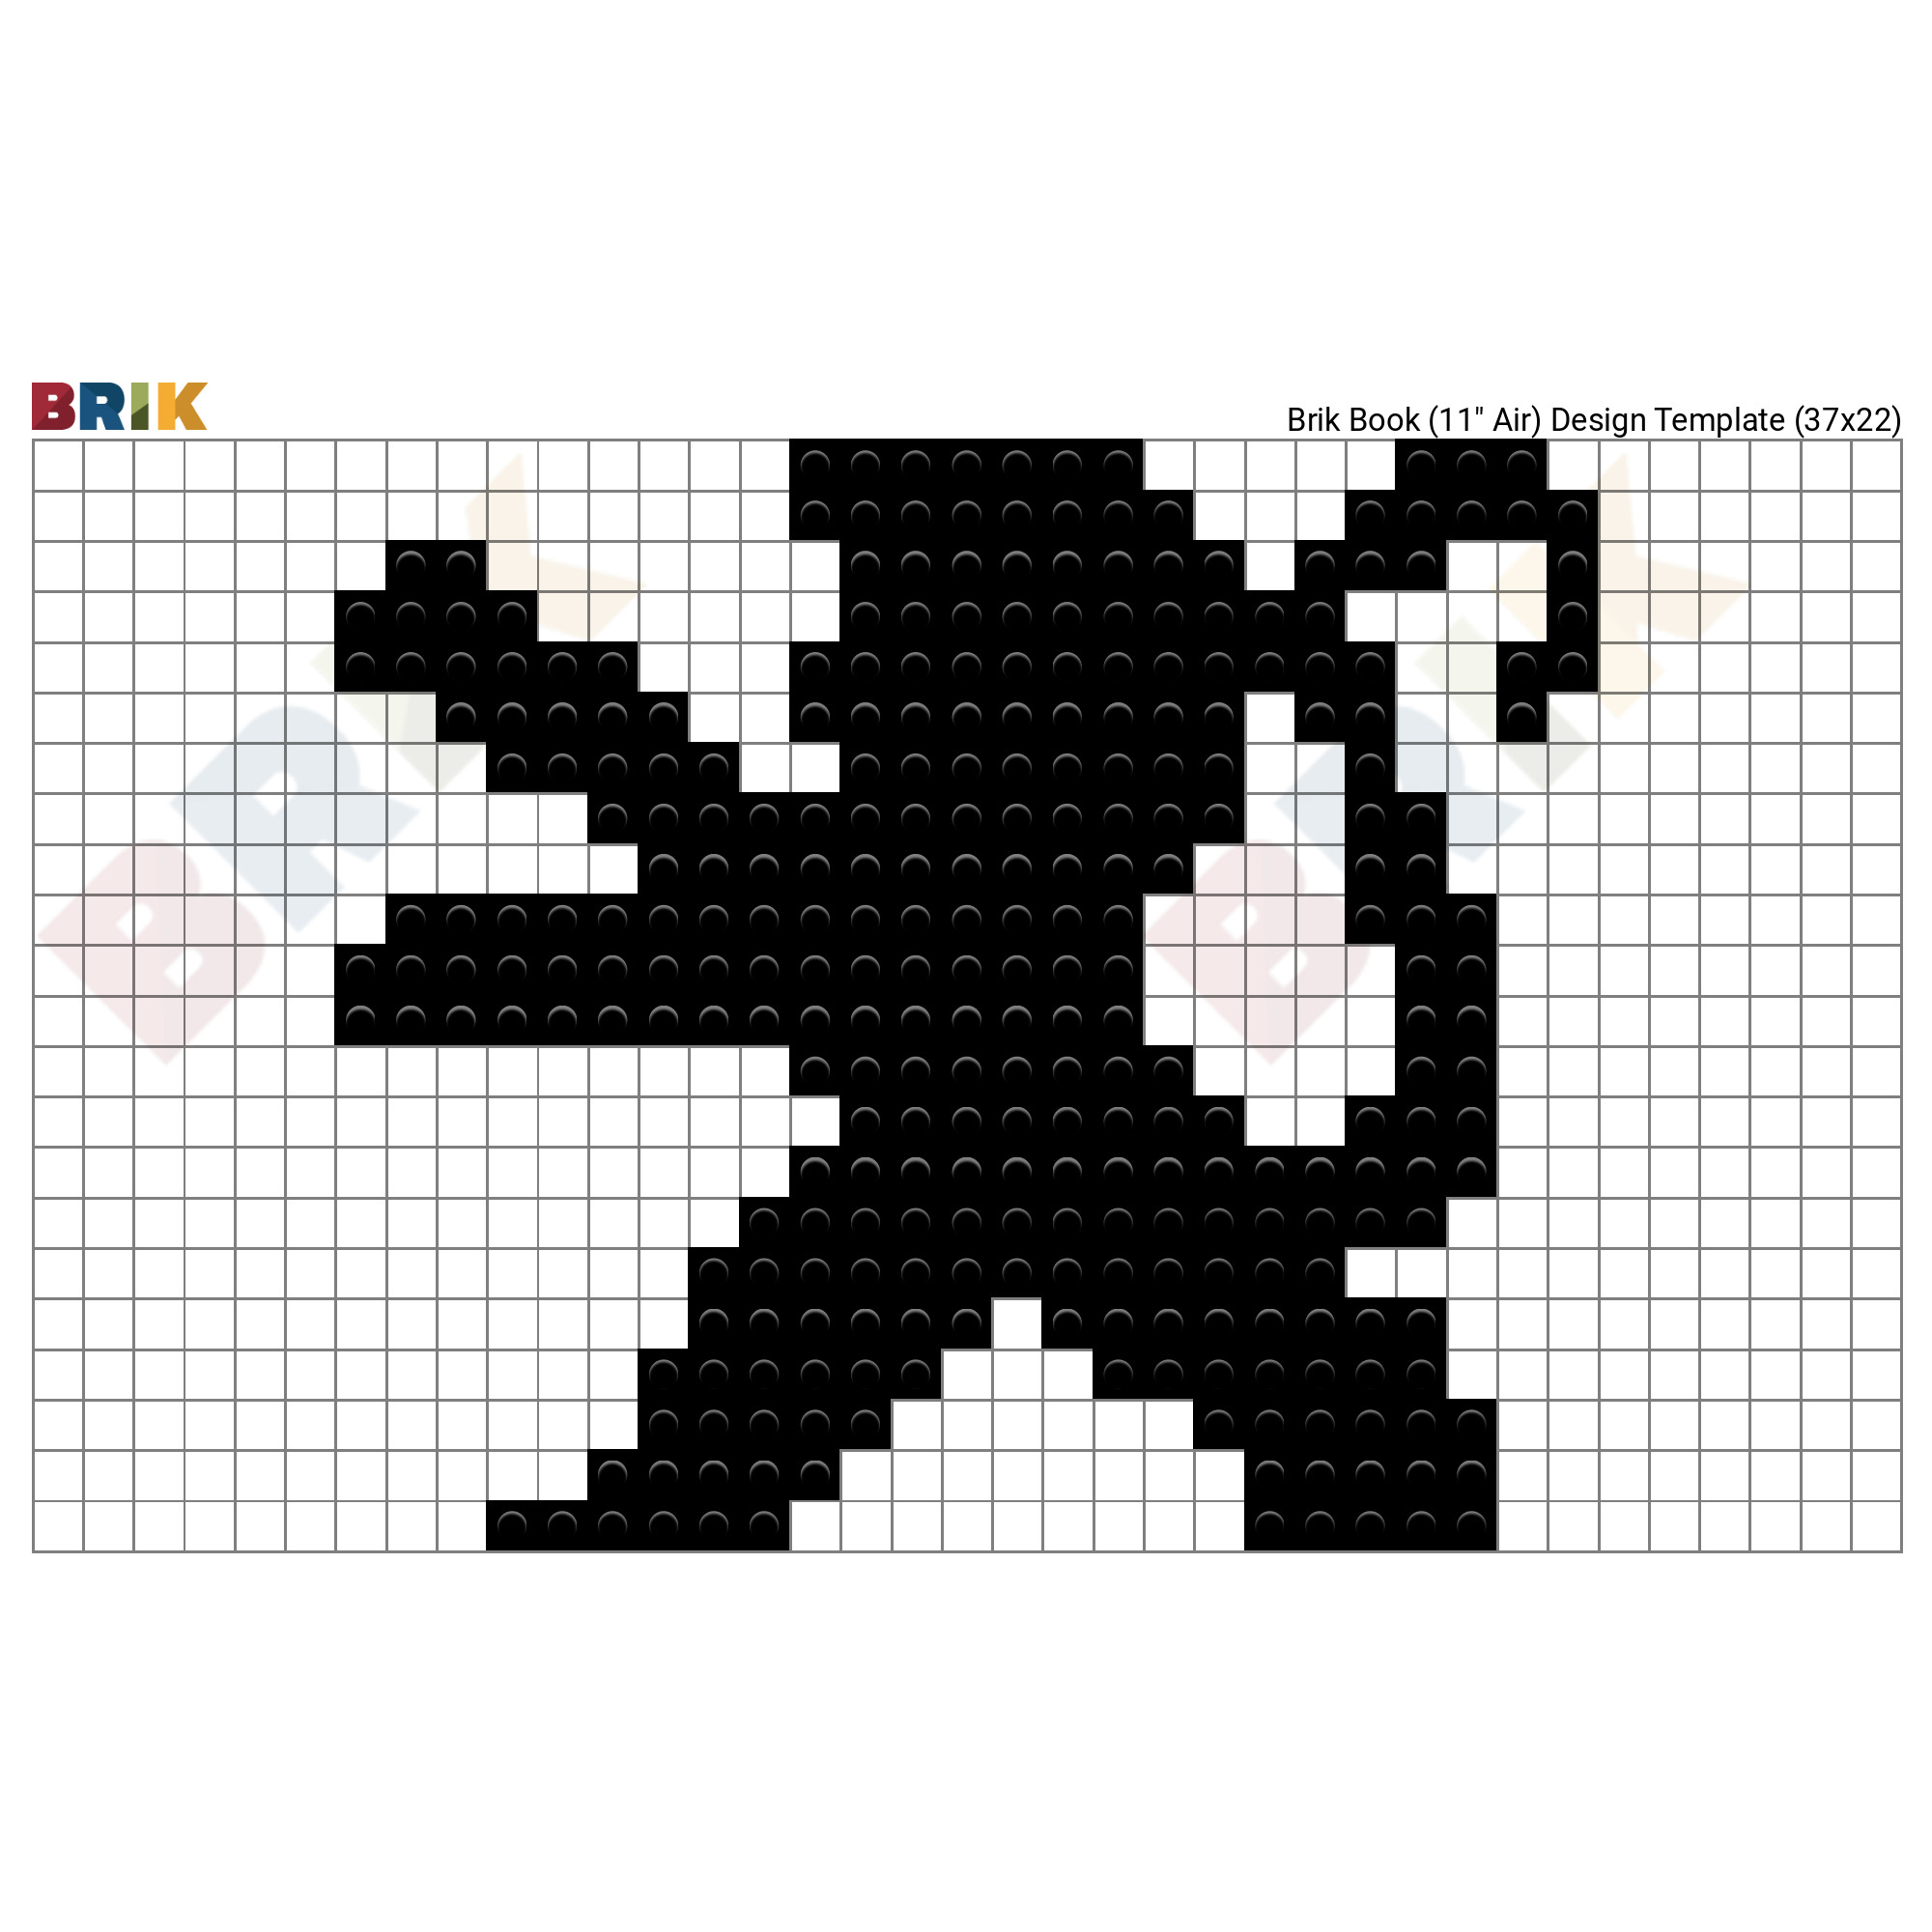 Peugeot Pixel Art – Brik serapportantà Voiture Pixel Art